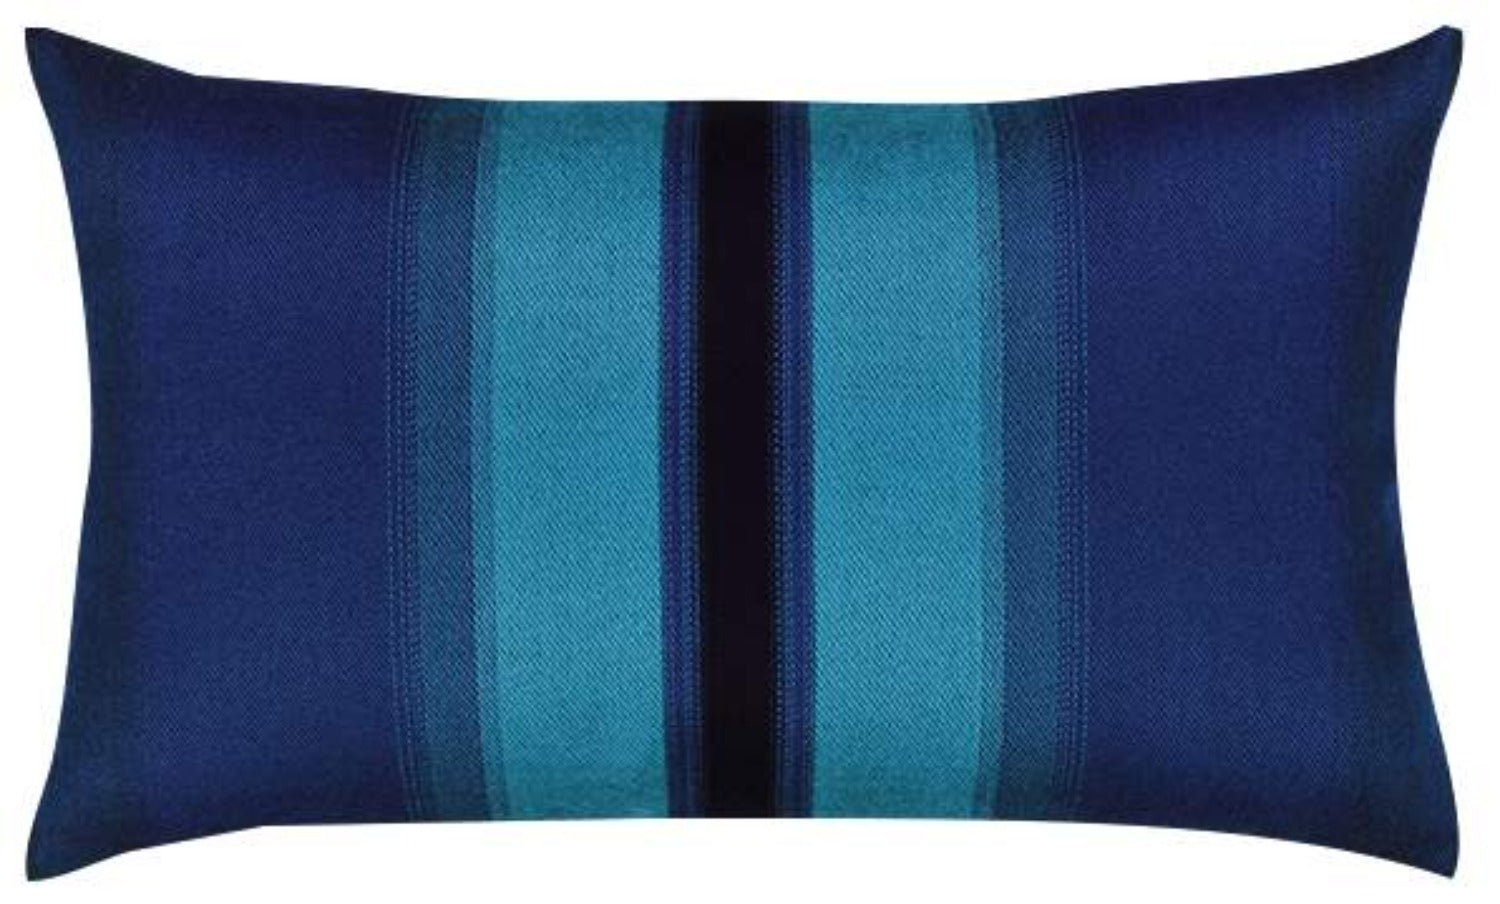 SALE! Elaine Smith 12" x 20" Lumbar Outdoor Pillow - Ombre Azure - Polyester Fiber Fill Throw Pillows 12031003